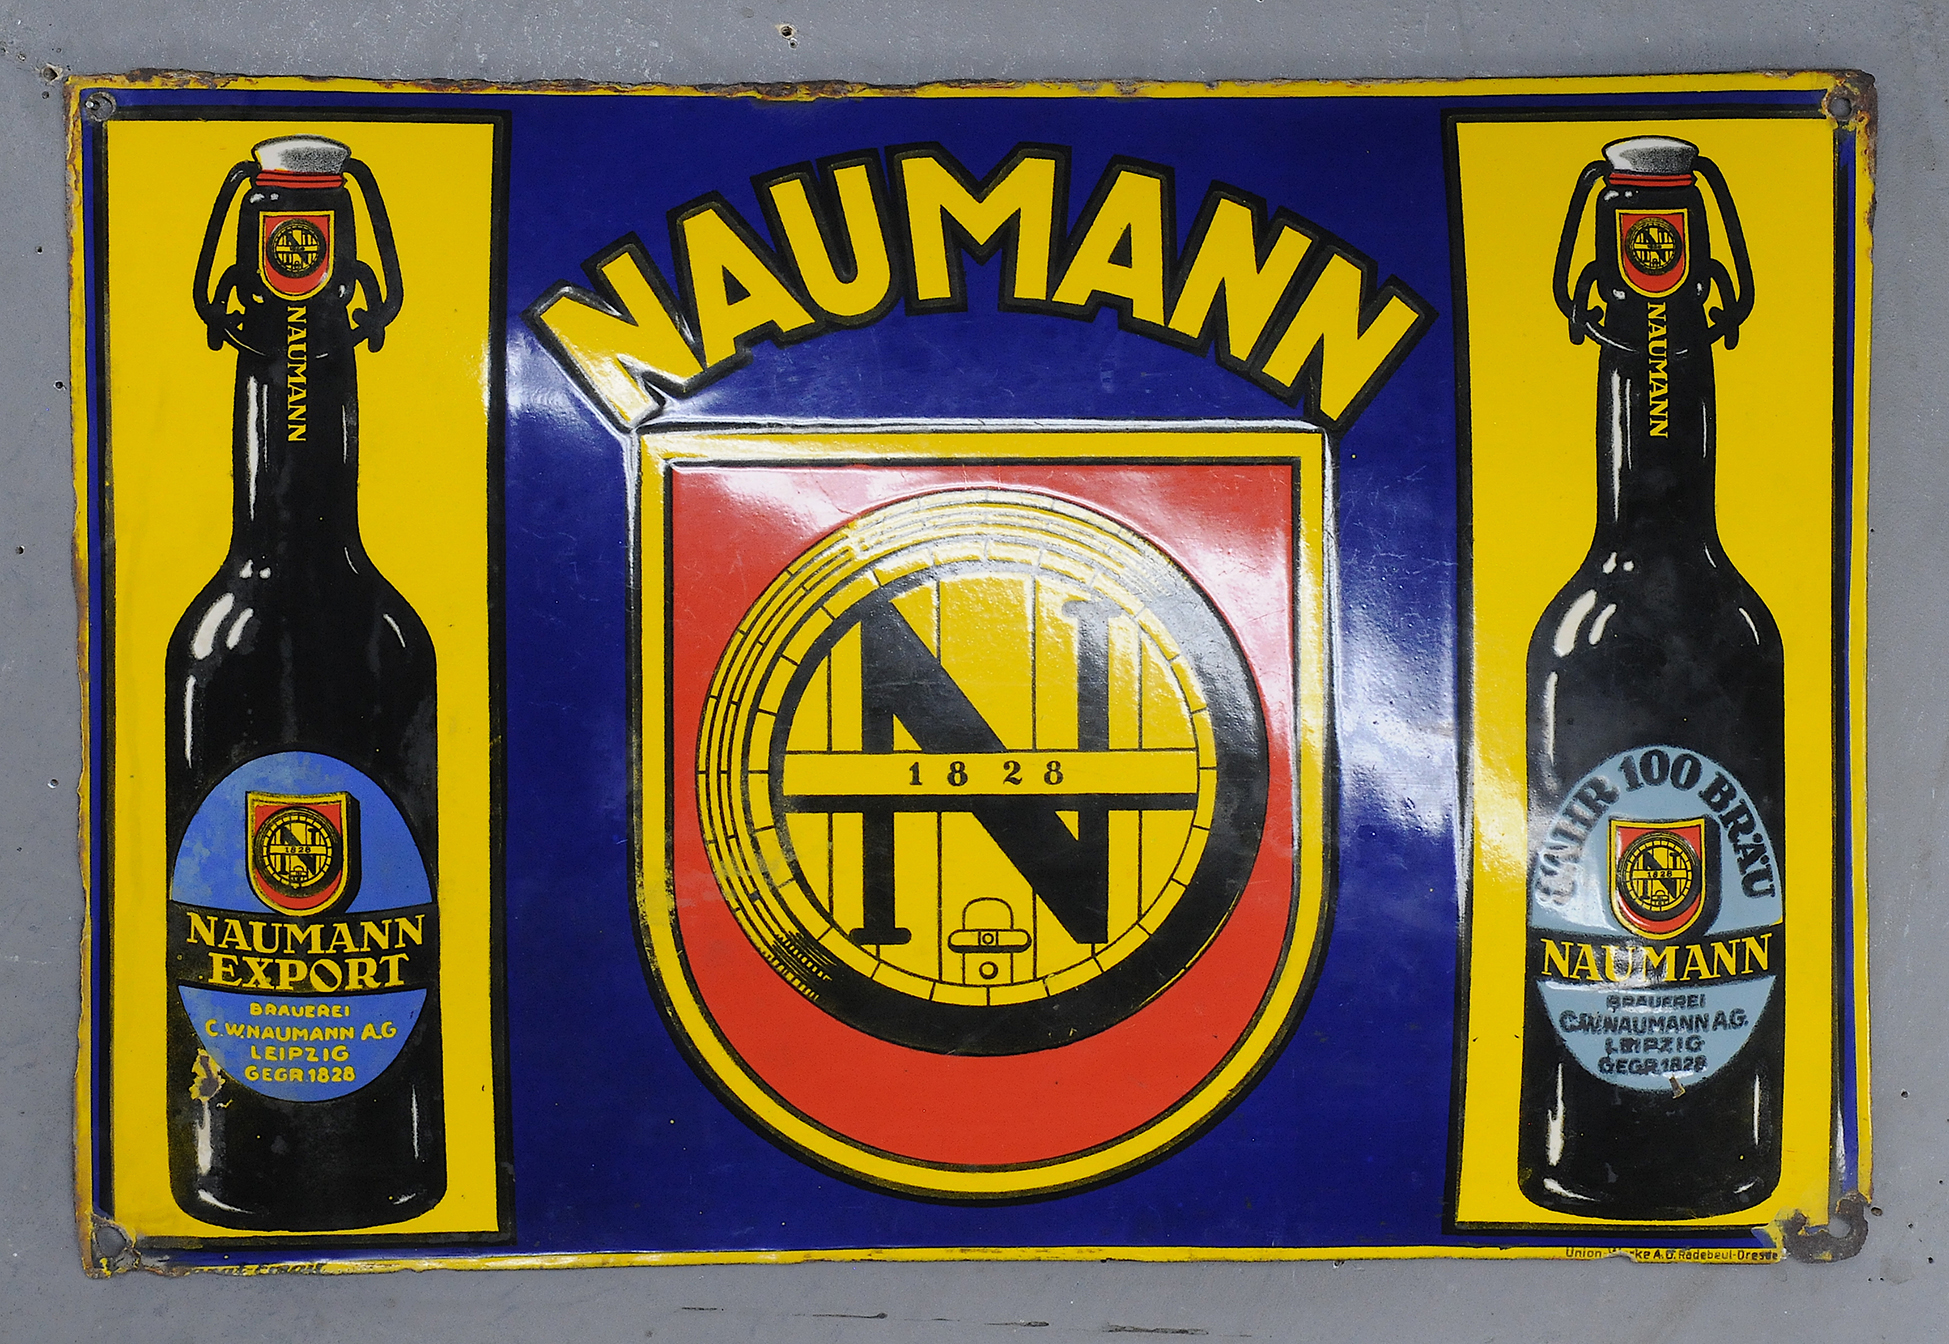 Naumann Bier - Image 3 of 3